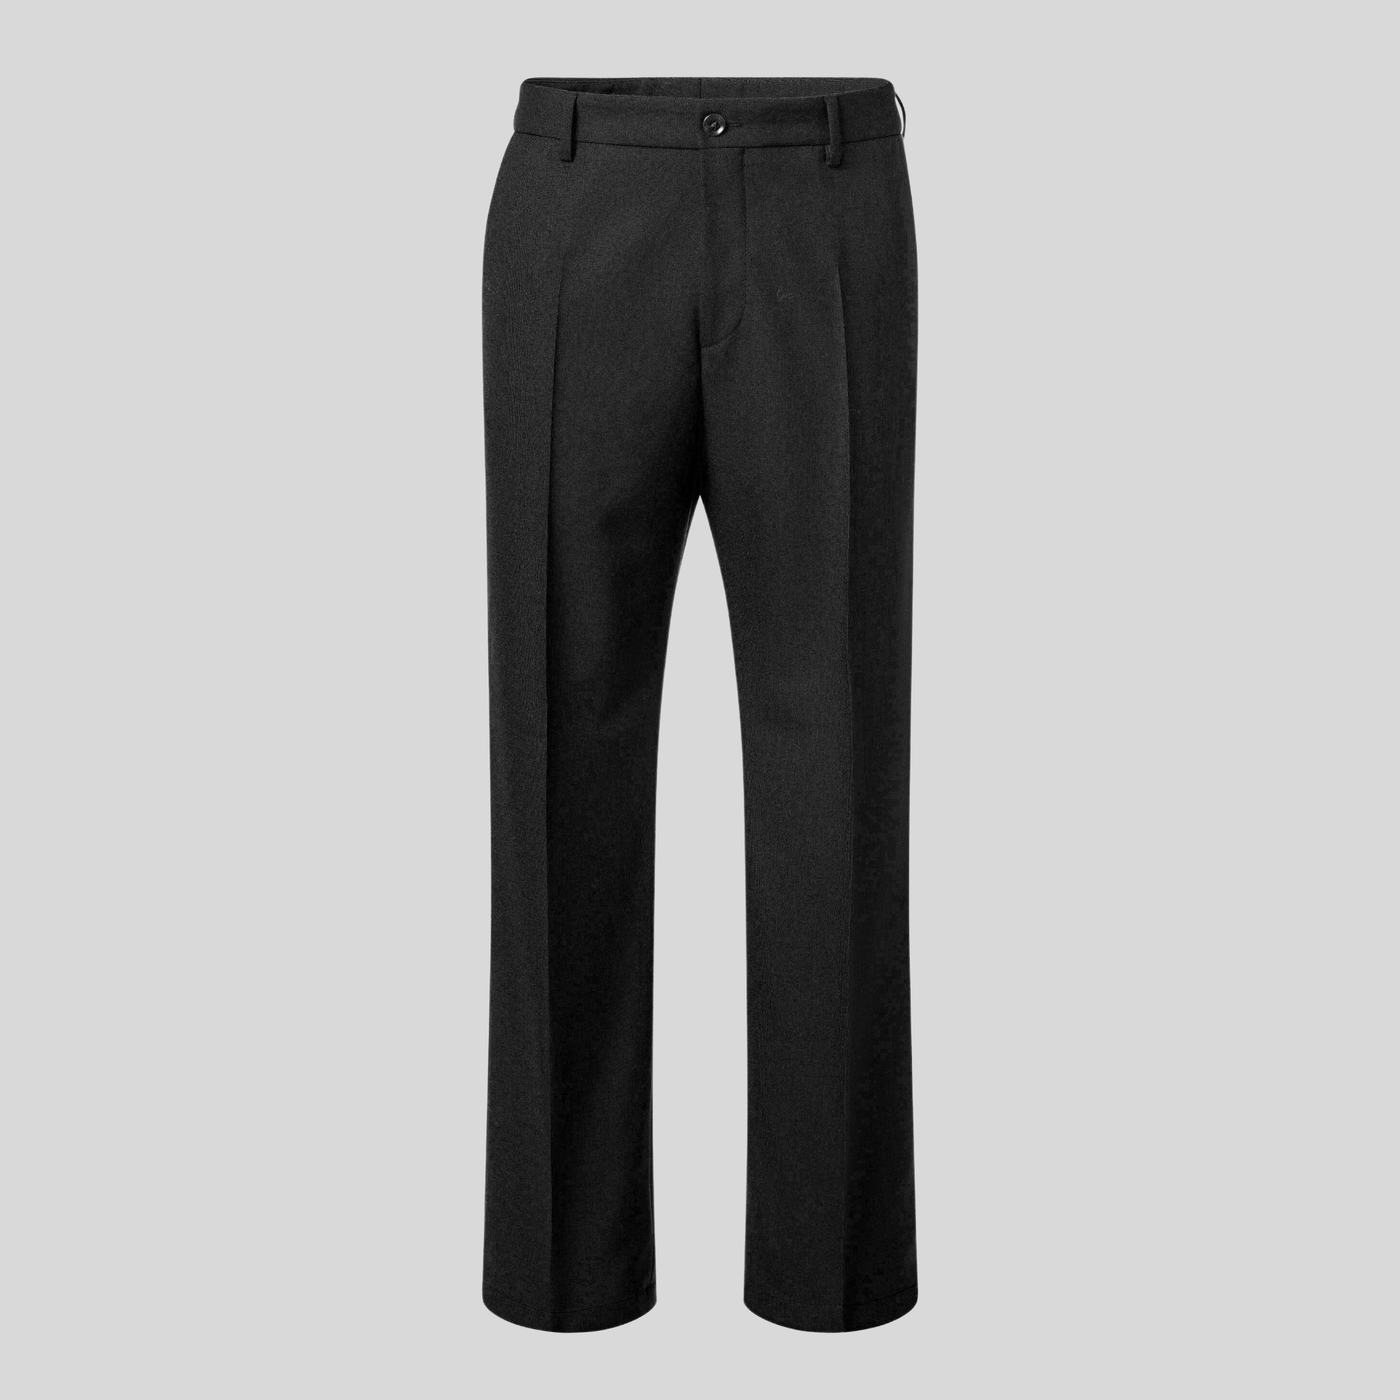 Gotstyle Fashion - Strellson Suits Loose Fit Wide Leg Wool Pants - Black